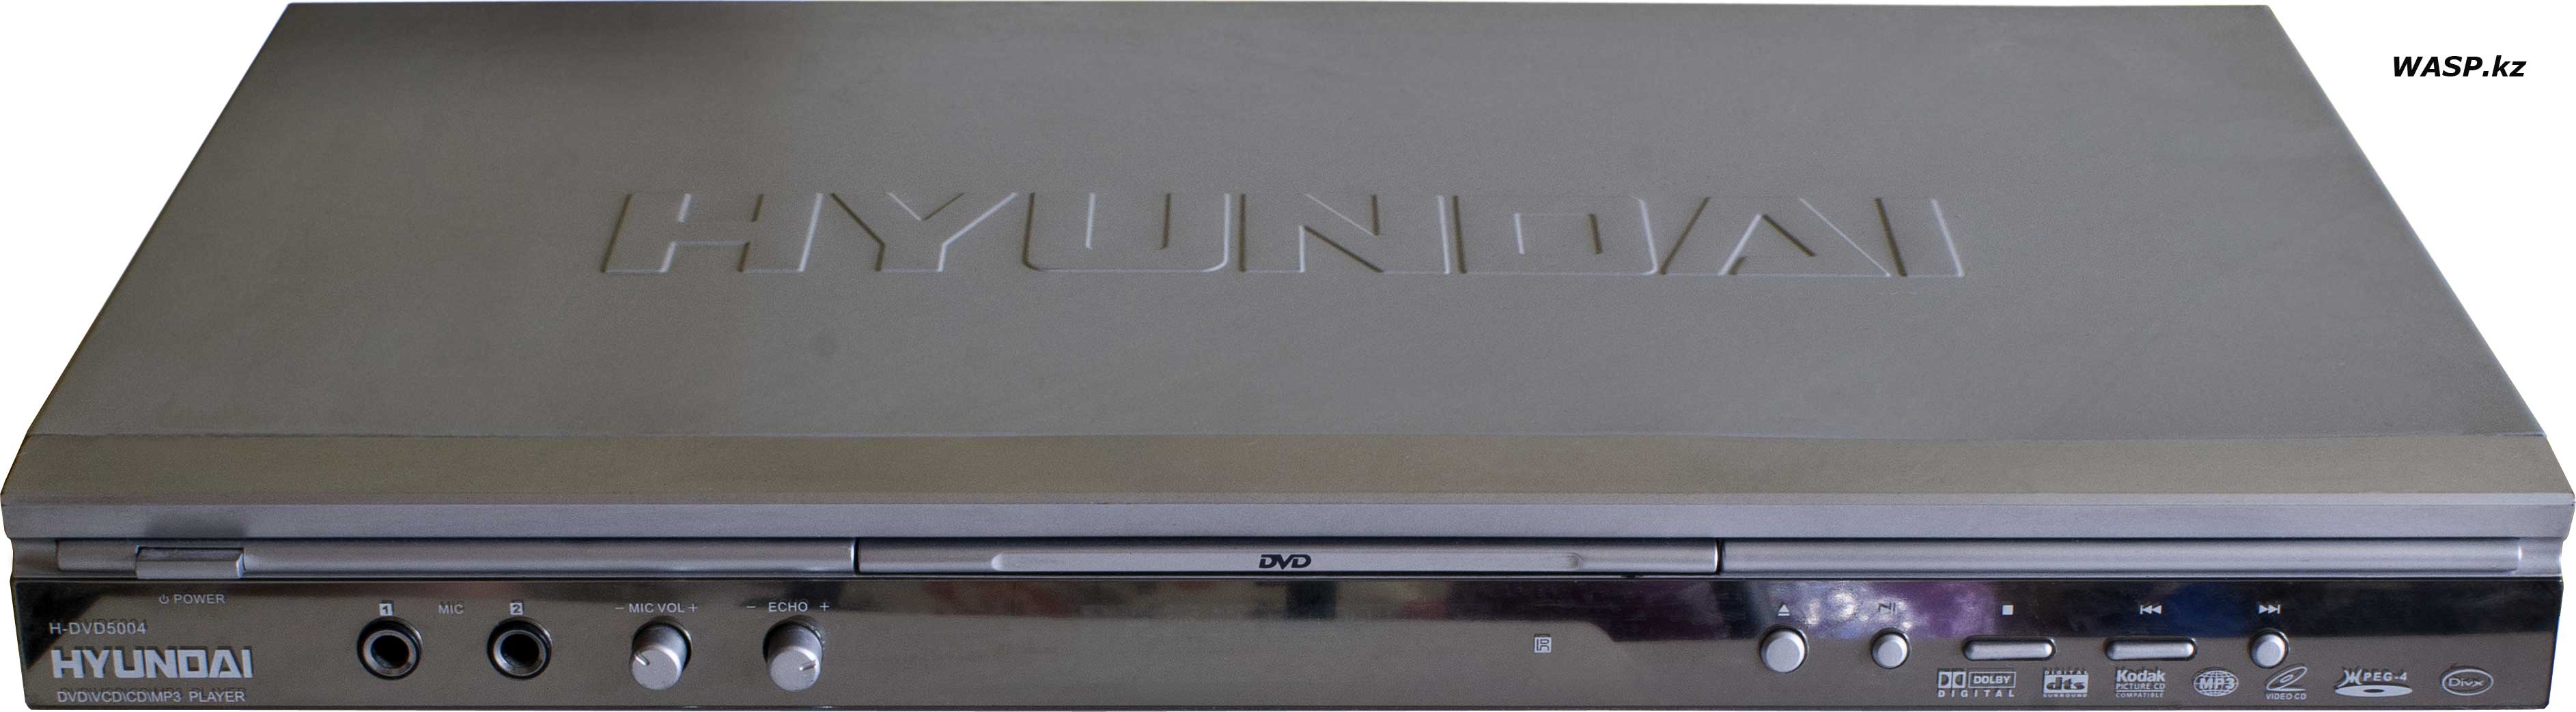 HYUNDAI H-DVD5004 полное описание DVD-плеера, характеристики